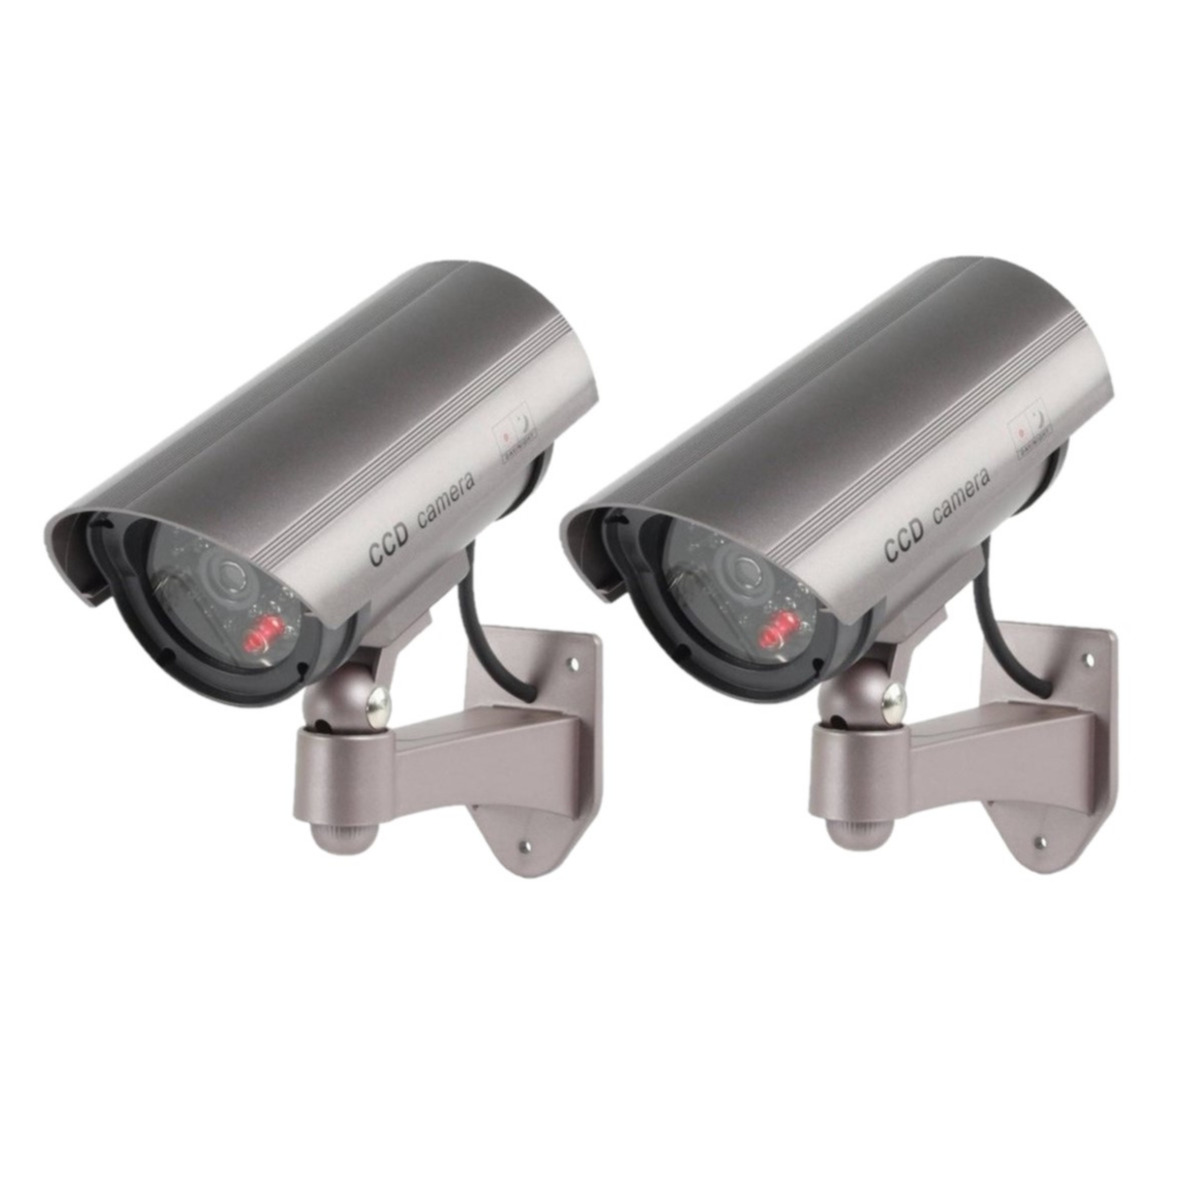 4x stuks dummy camera-beveiligingscamera met LED